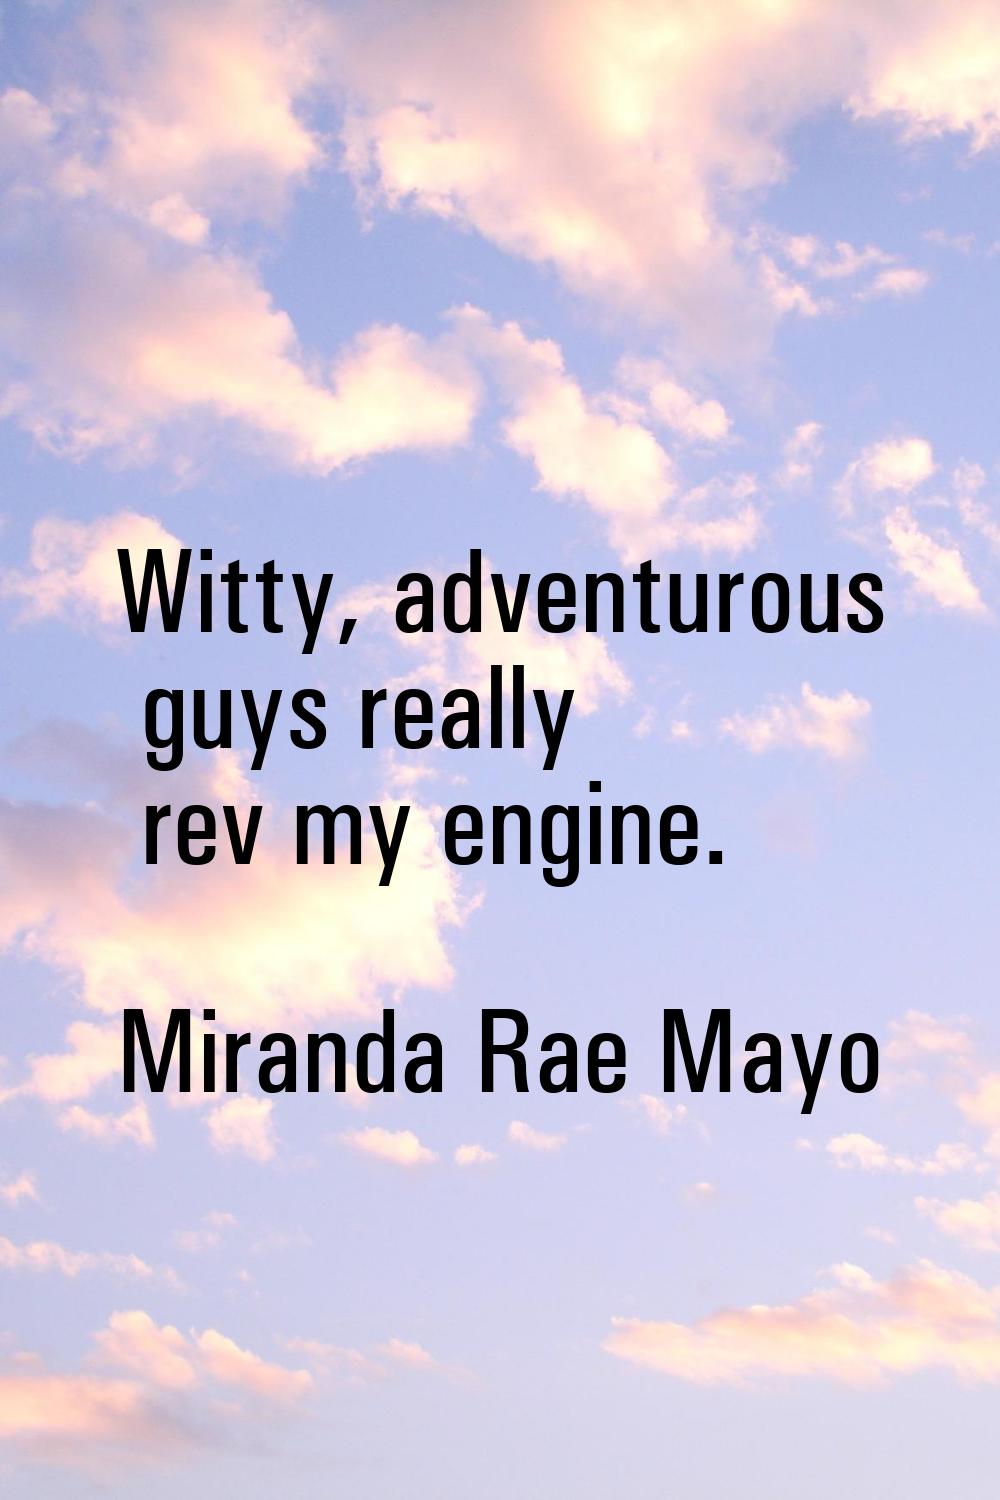 Witty, adventurous guys really rev my engine.